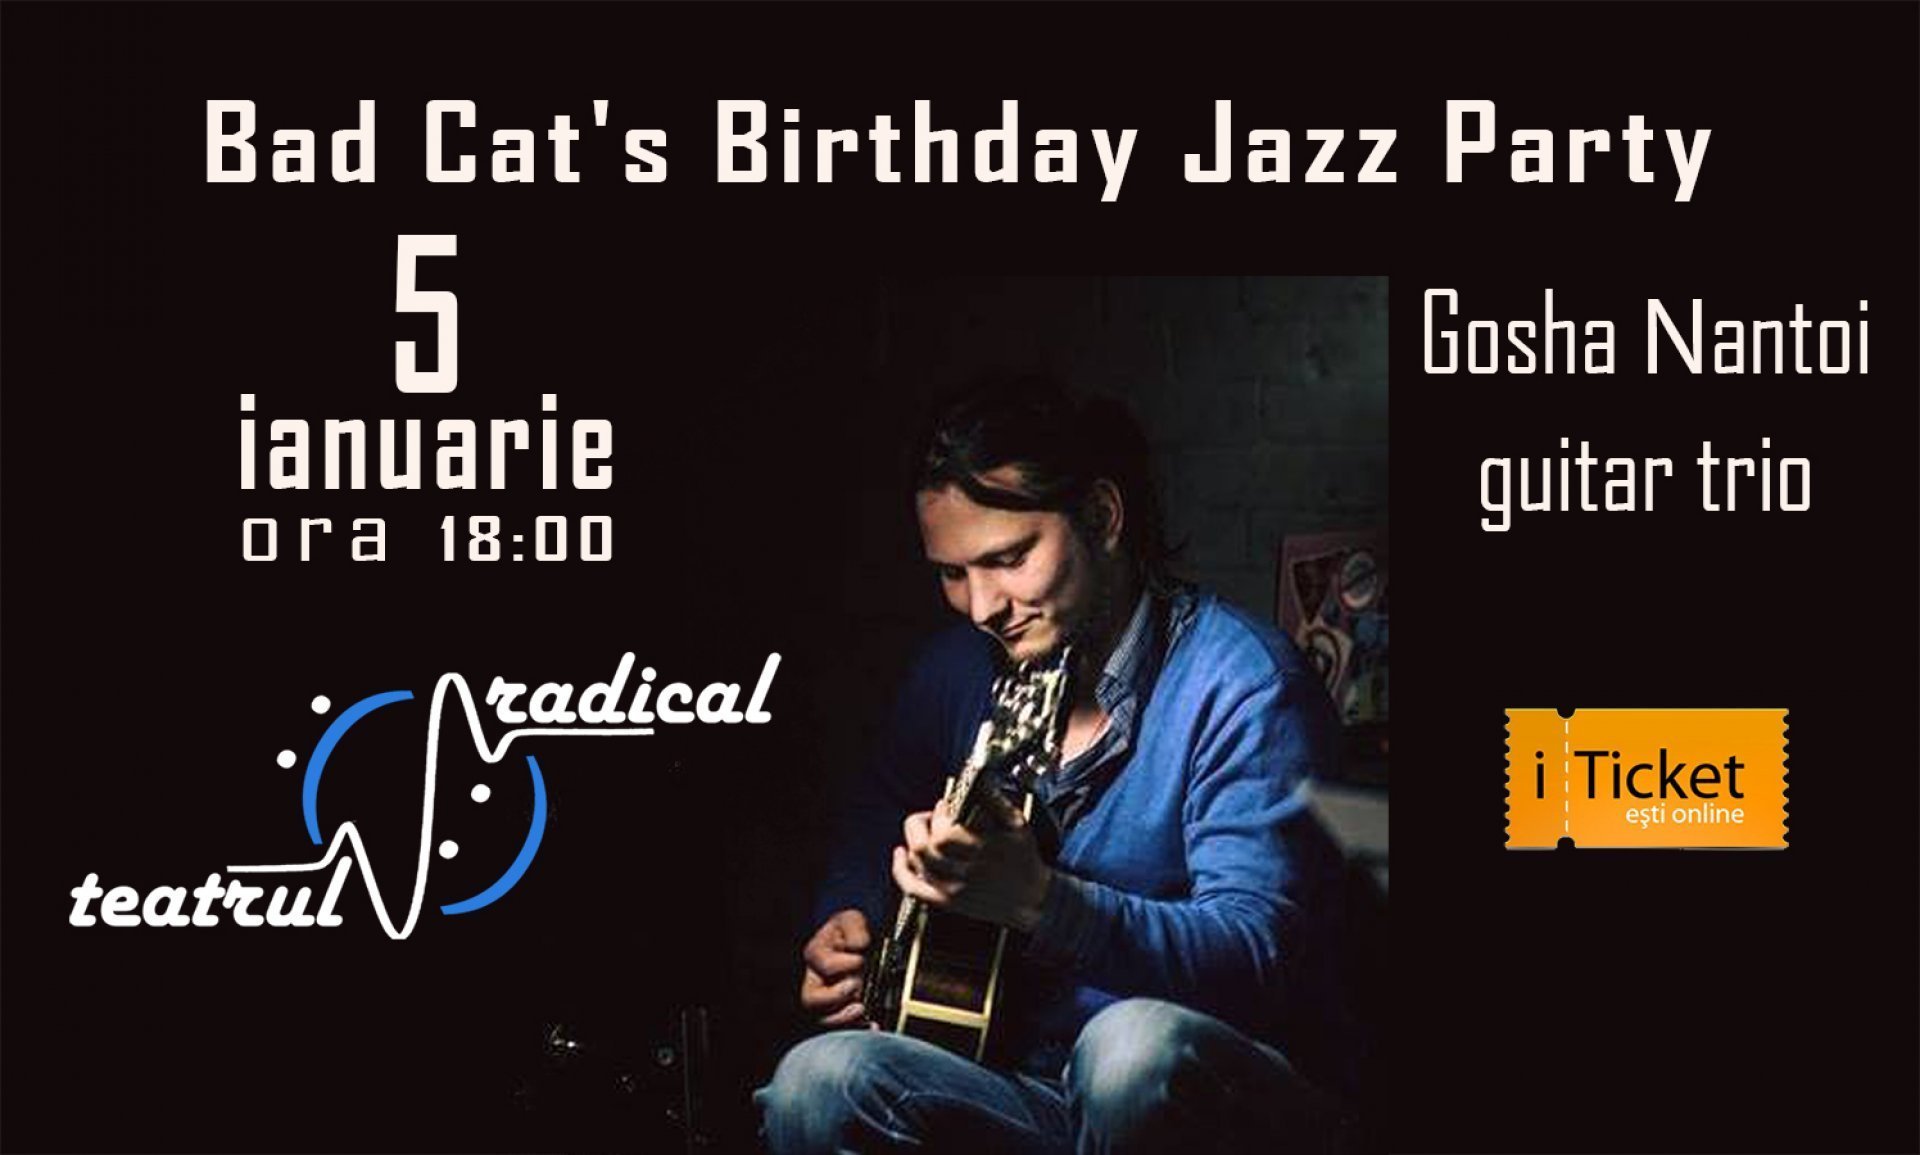 Bad Cat's Birthday Jazz Party